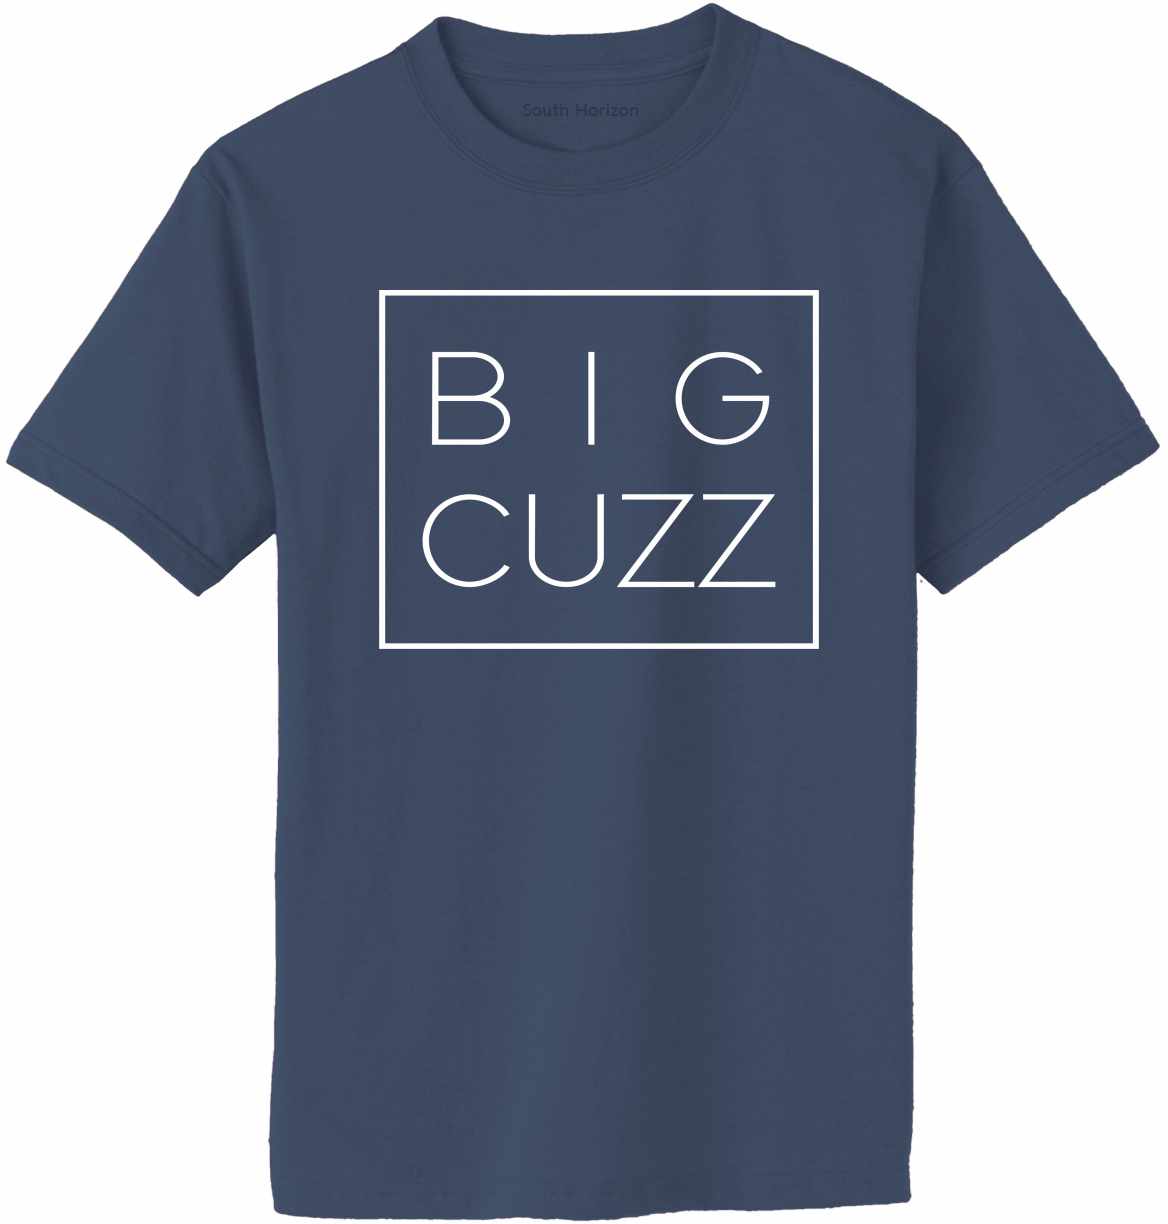 Big Cuzz - Big Cousin - Box on Adult T-Shirt (#1317-1)